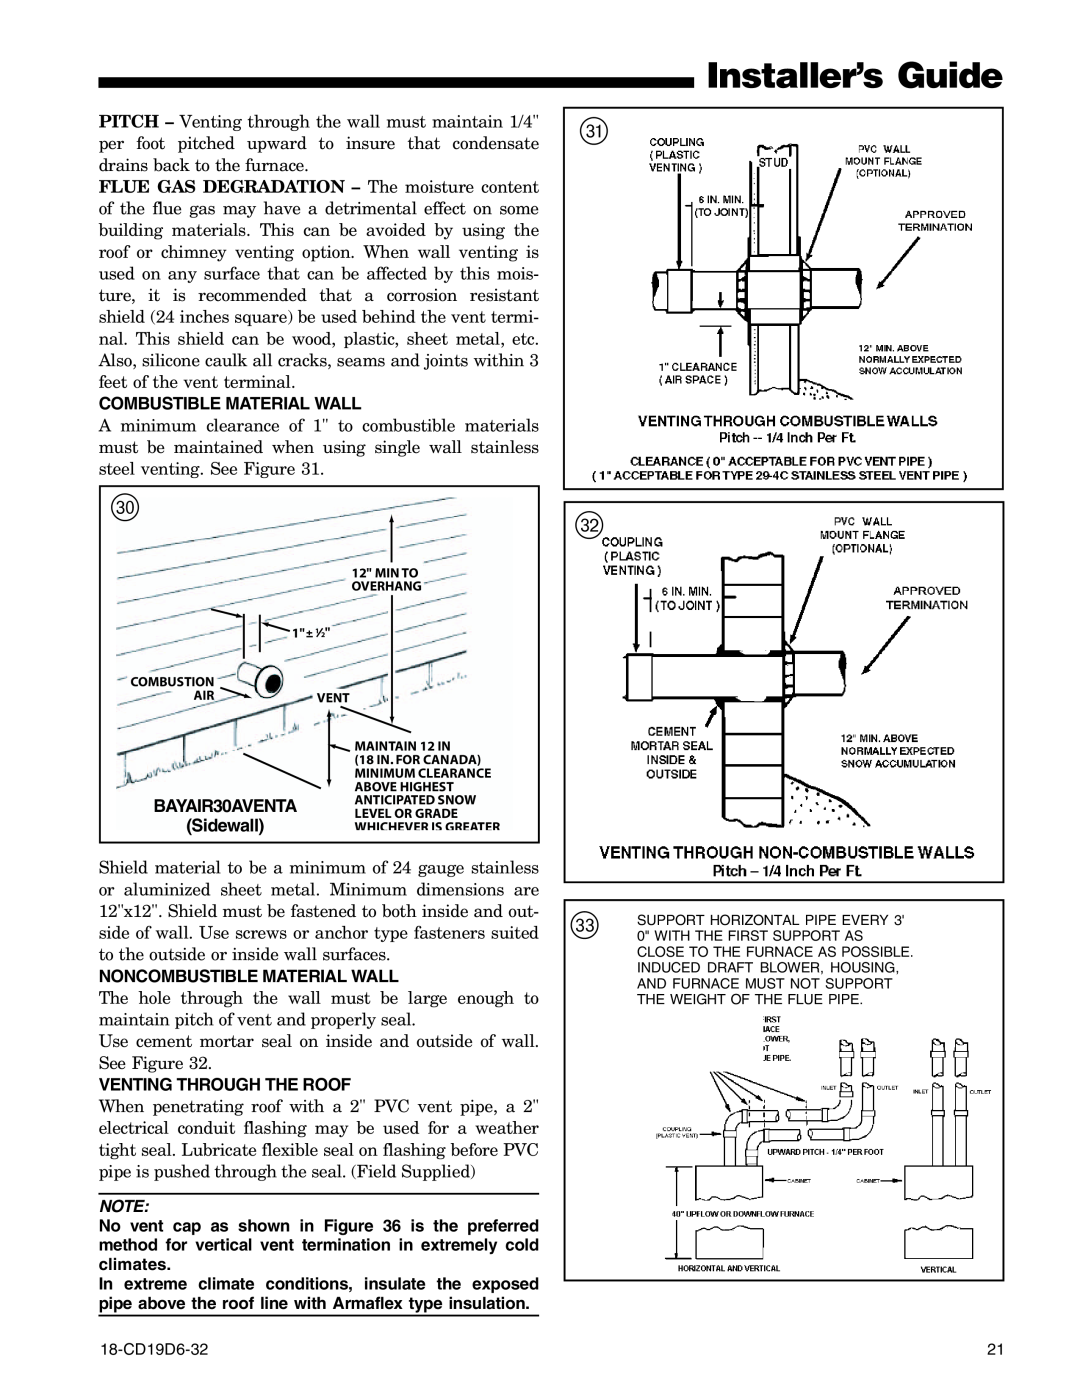 Trane UX1B060A9241A Installer’s Guide, Combustible Material Wall, BAYAIR30AVENTA Sidewall, Noncombustible Material Wall 